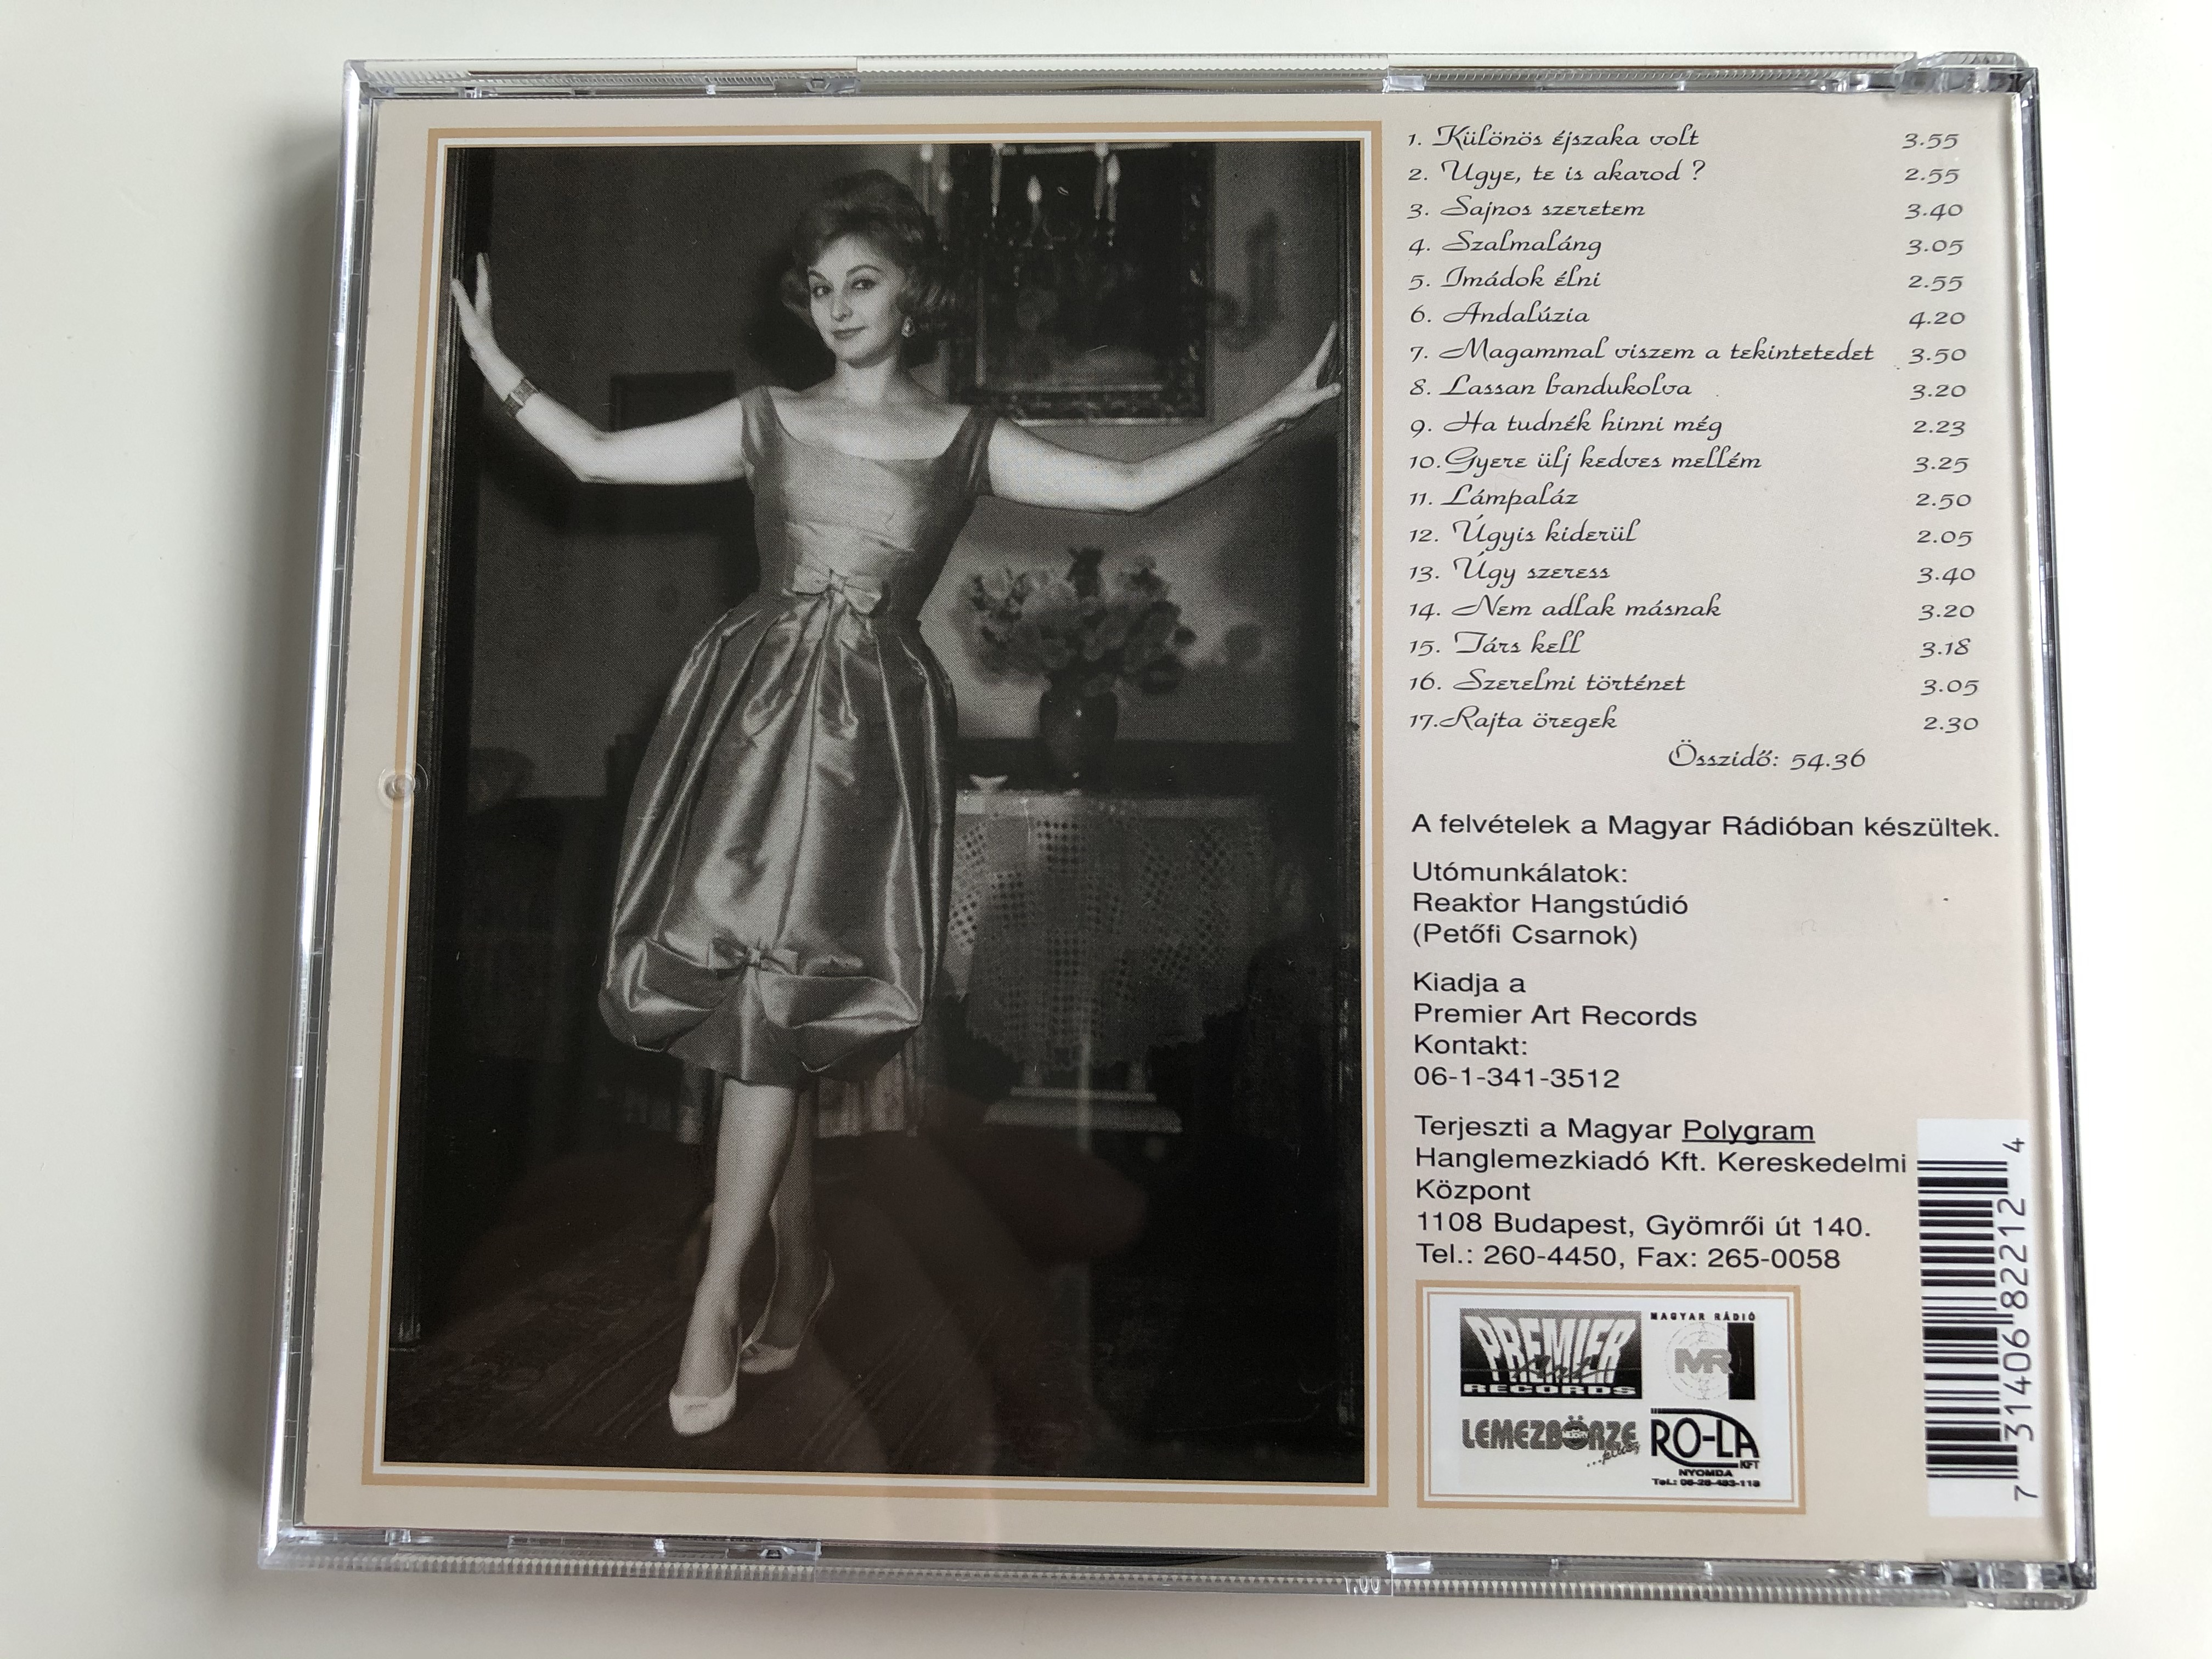 s-rosi-katalin-k-l-n-s-jszaka-volt-premier-art-records-audio-cd-1998-068221-2-4-.jpg